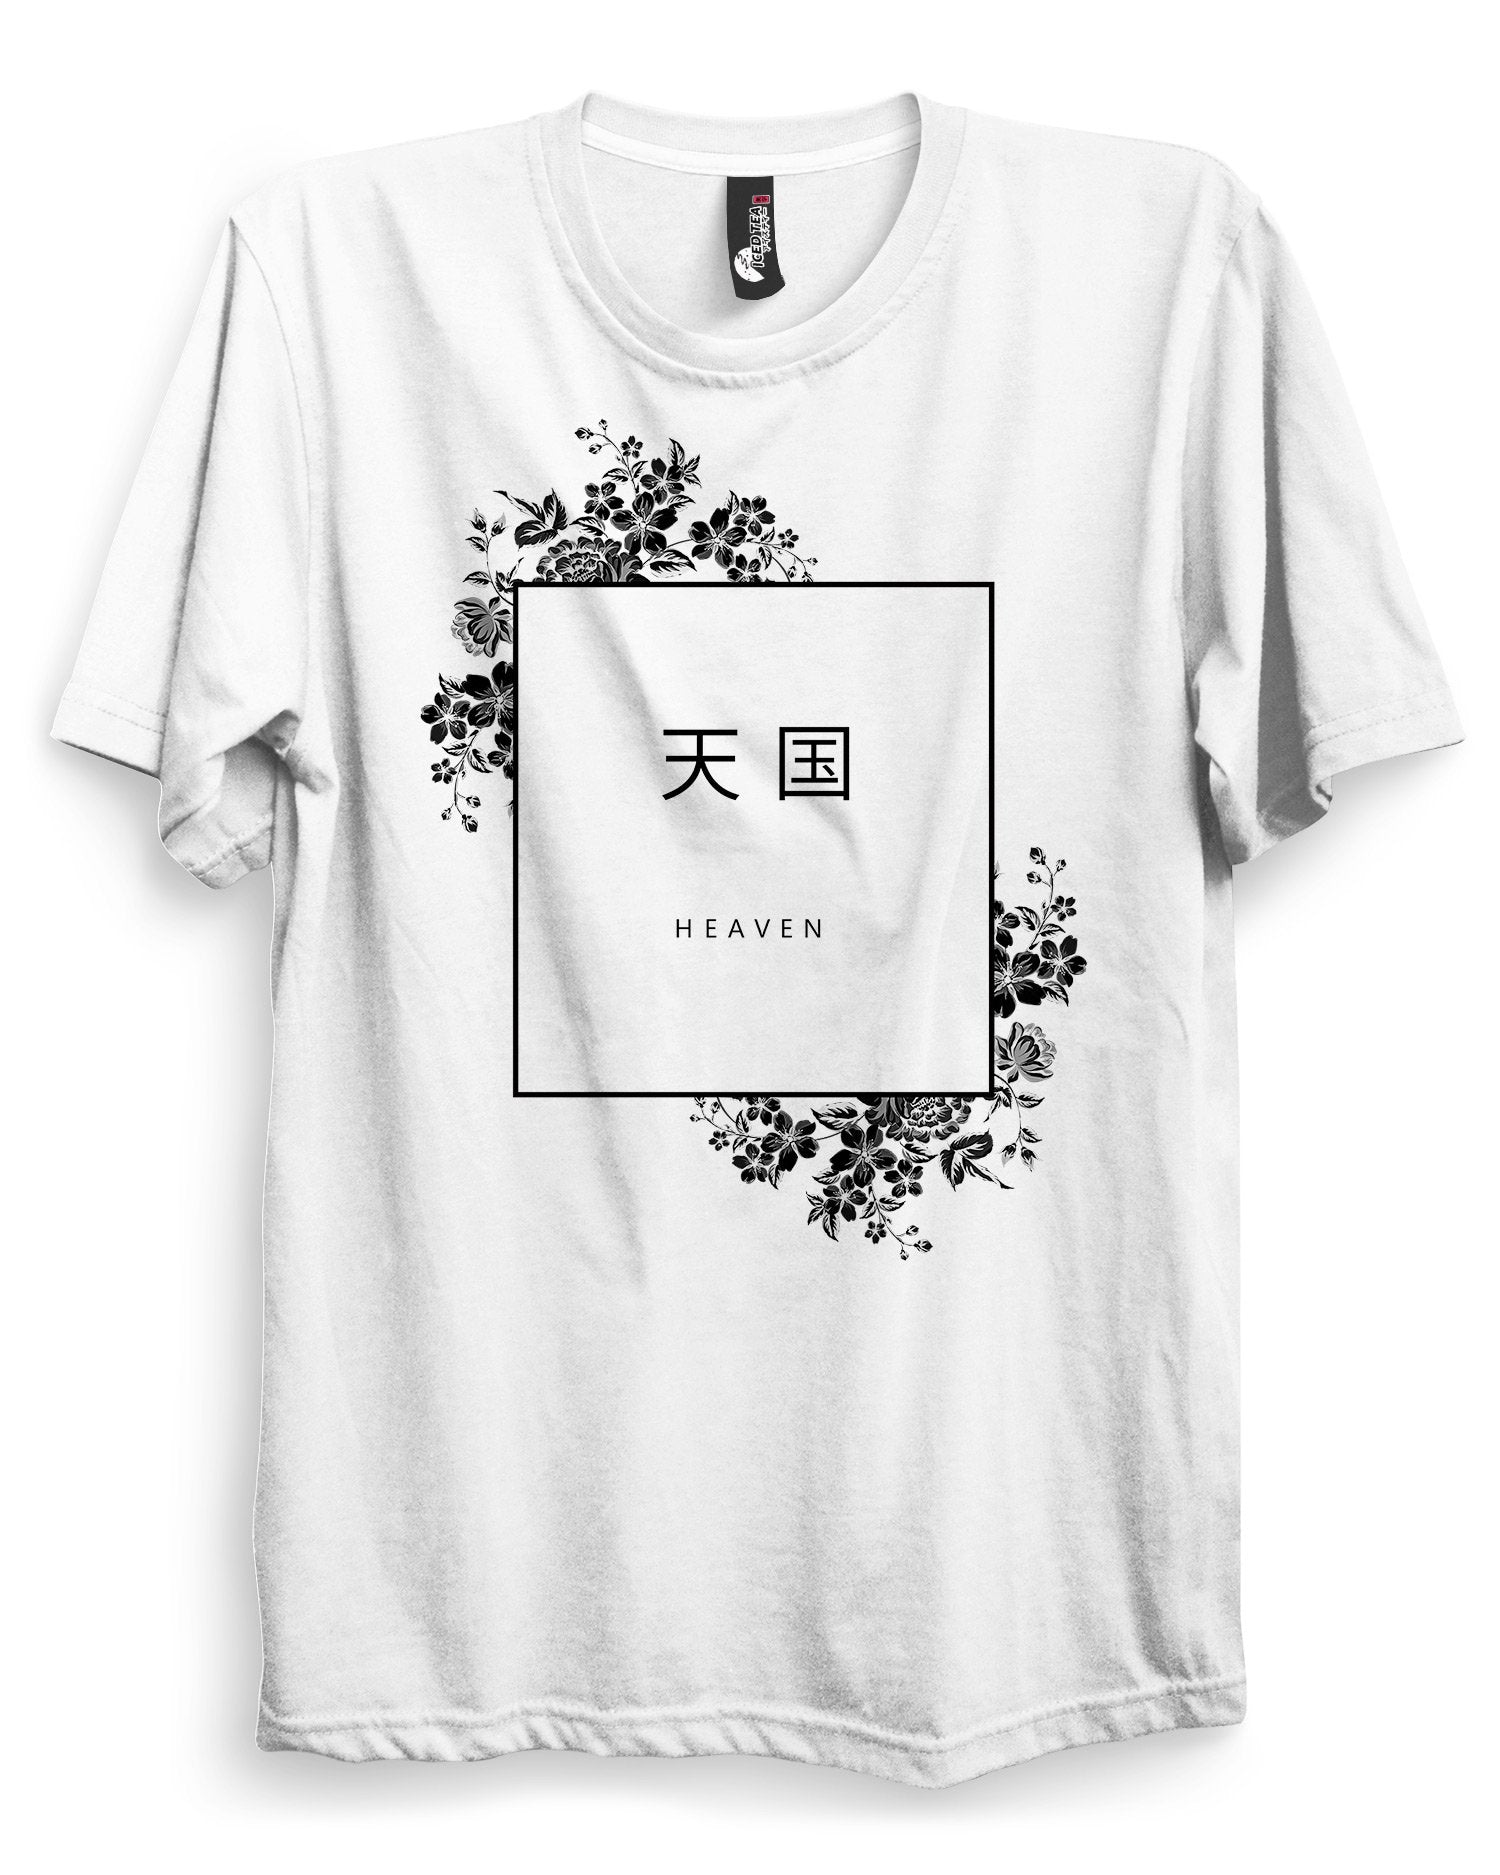 HEAVEN (天国) - Aesthetic T-Shirt - Dark Aesthetics and Anime Clothing Streetwear